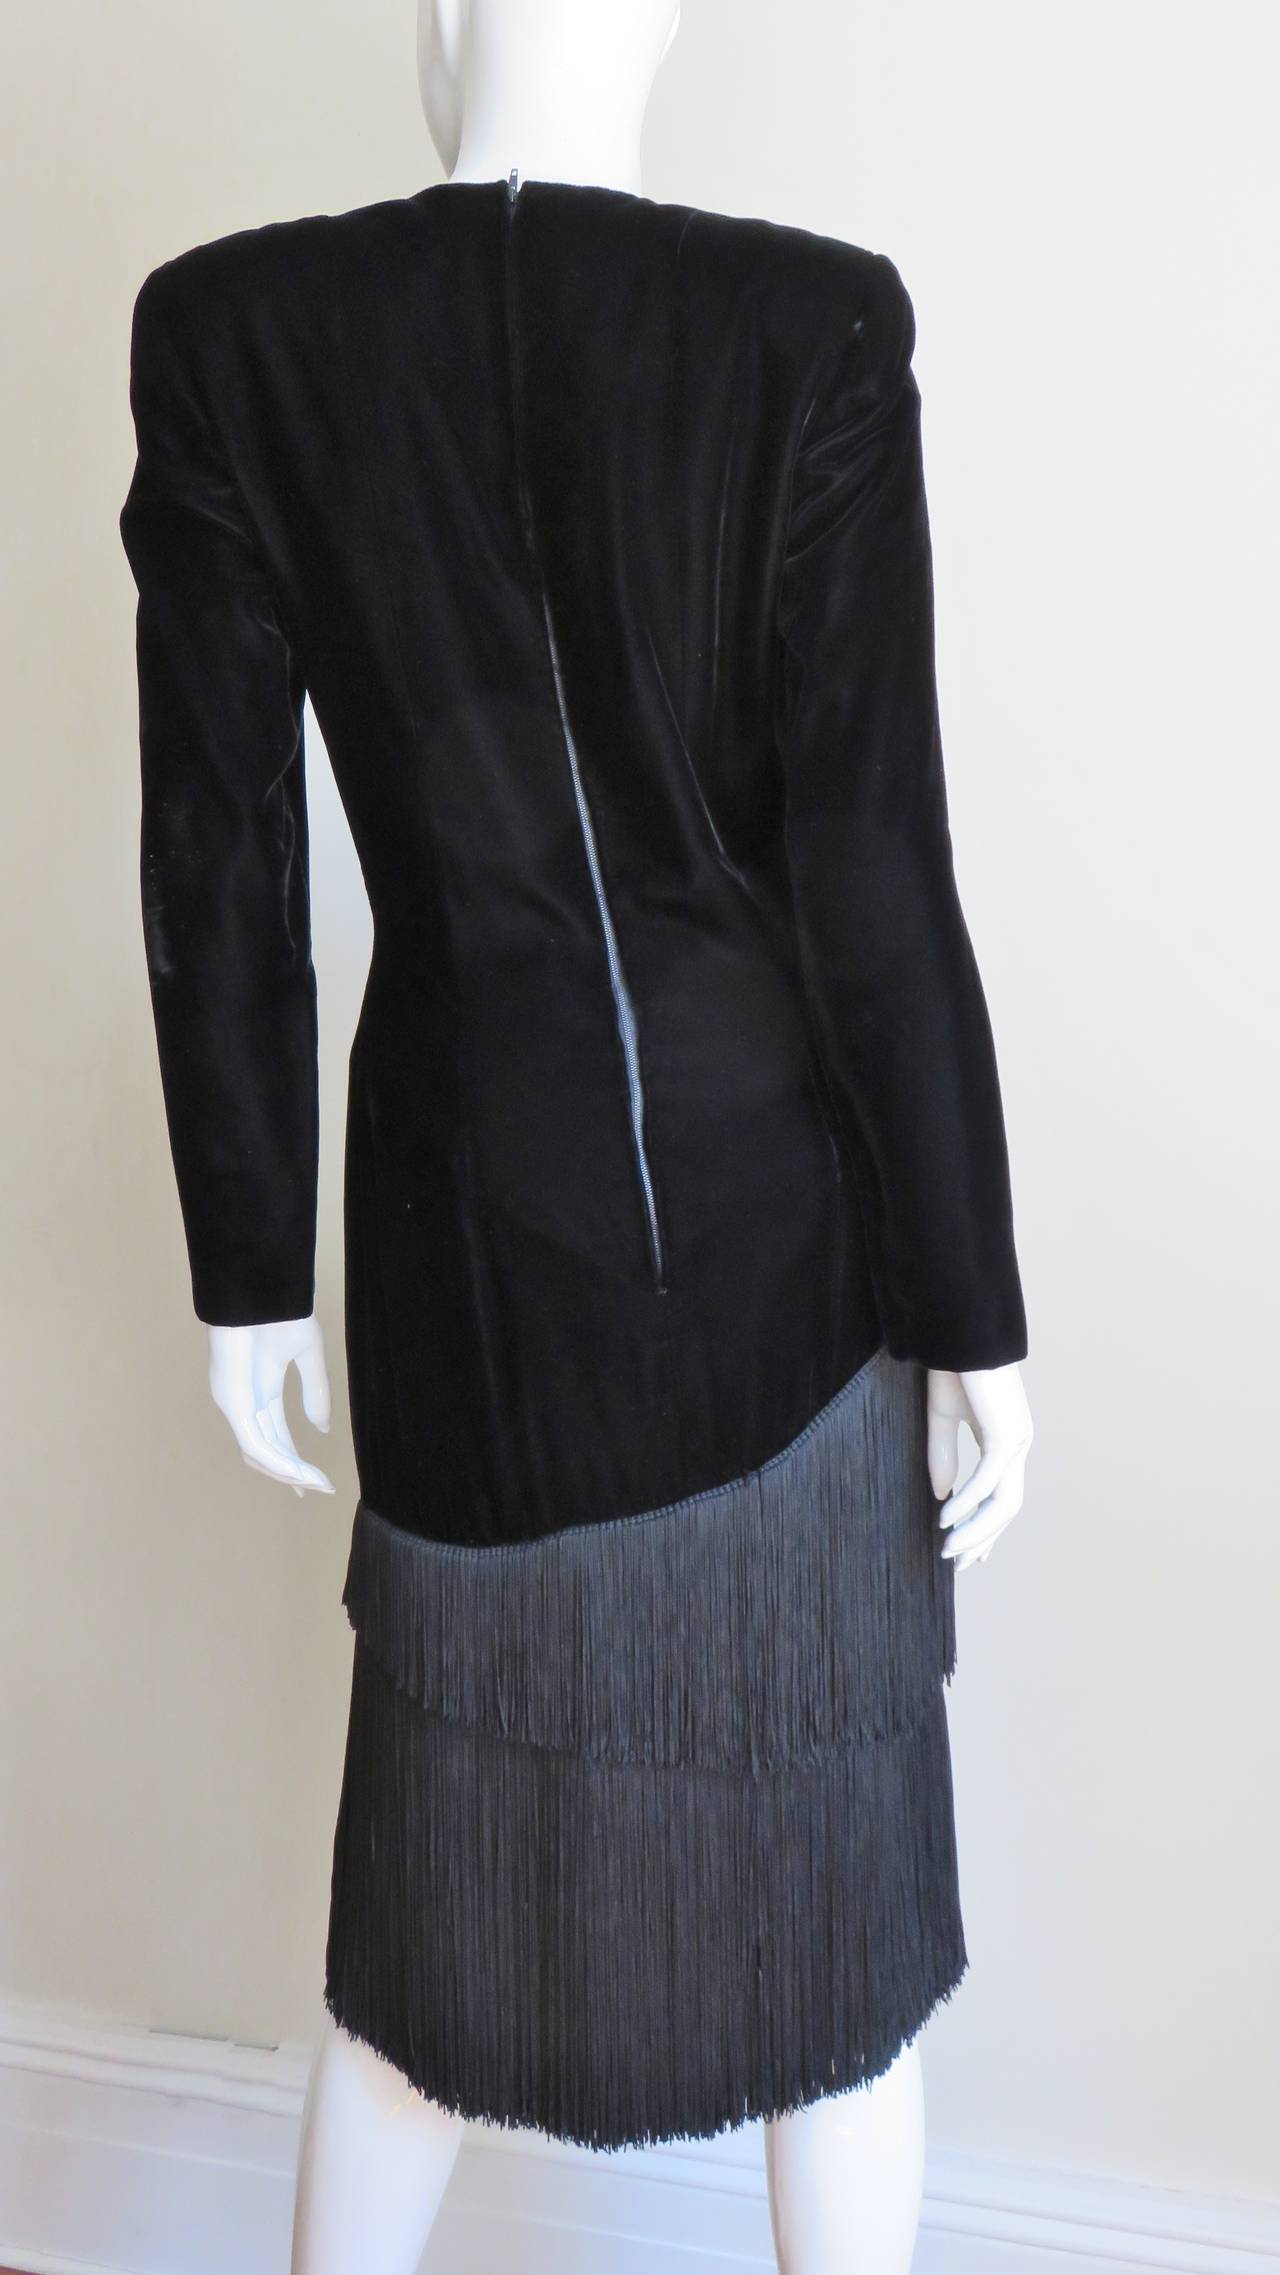  Lanvin Dress with Fringe 1980s For Sale 3